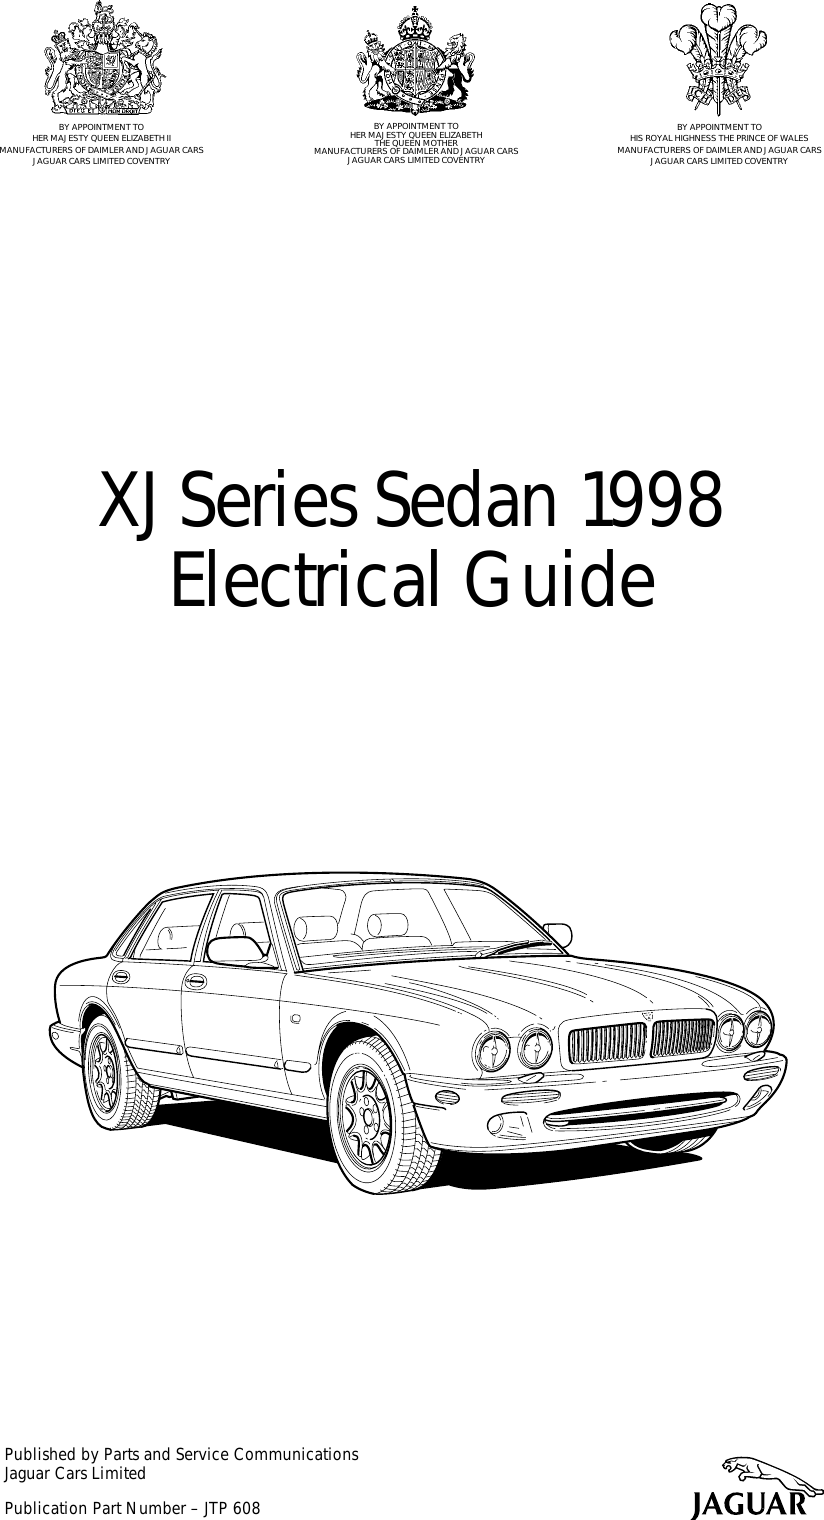 Jaguar Semcon Jlr Xj Users Manual X300